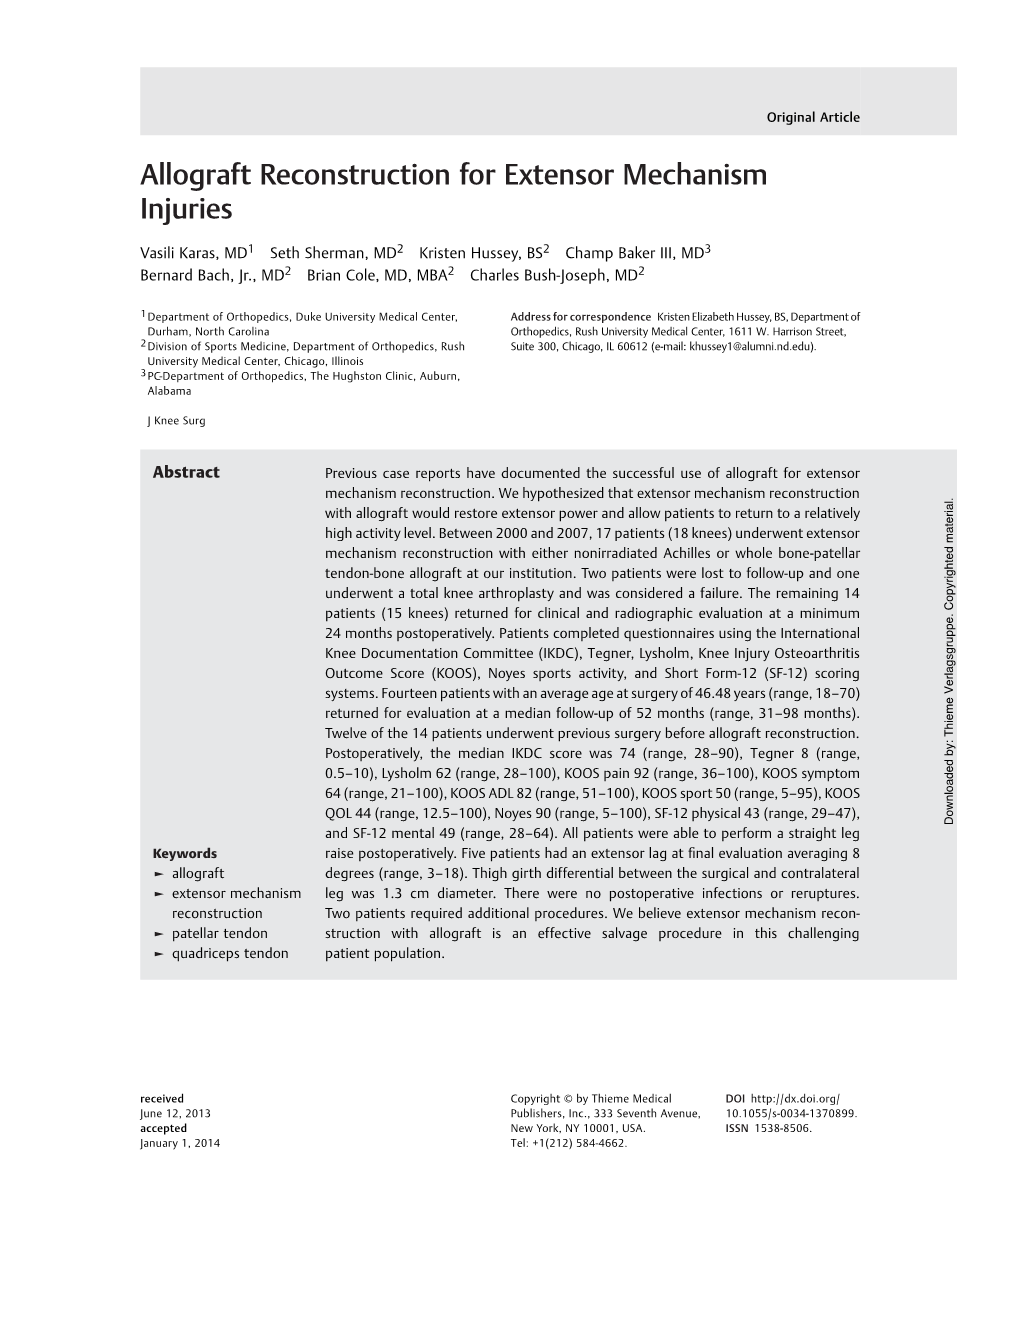 Allograft Reconstruction for Extensor Mechanism Injuries